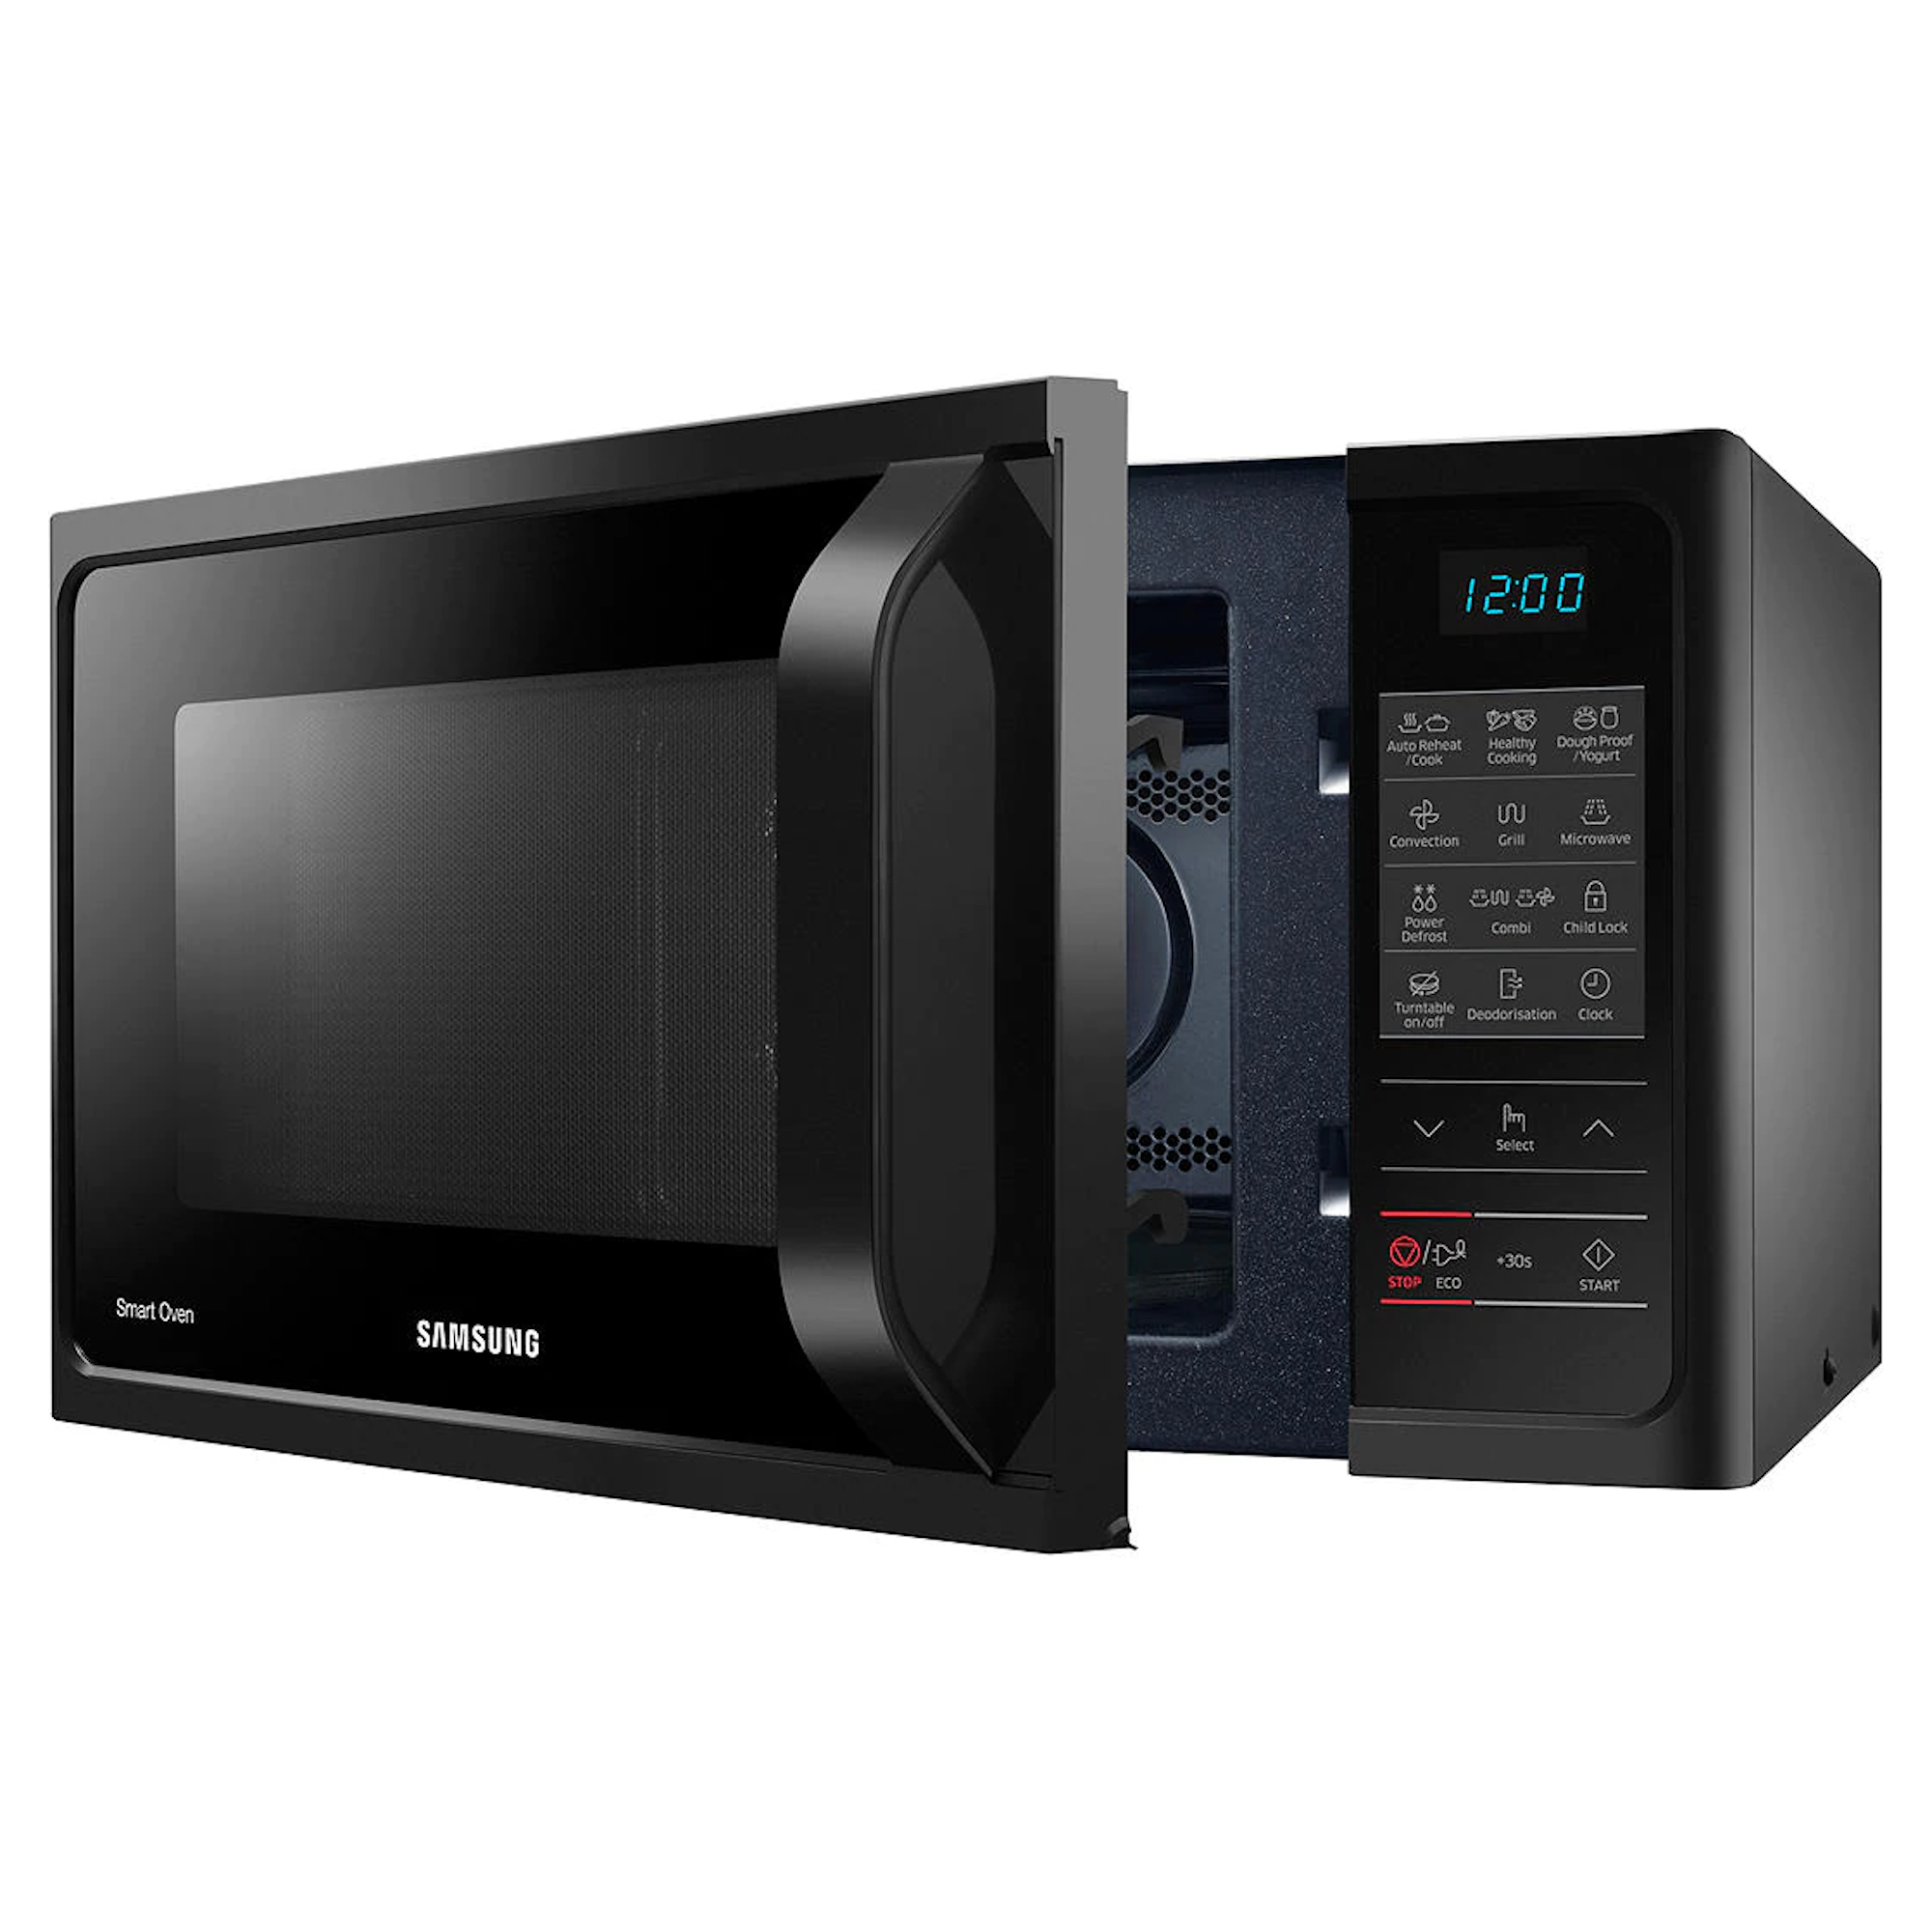 Samsung MC28H5013AK 28L Combination Microwave Oven 8806085954946 | eBay